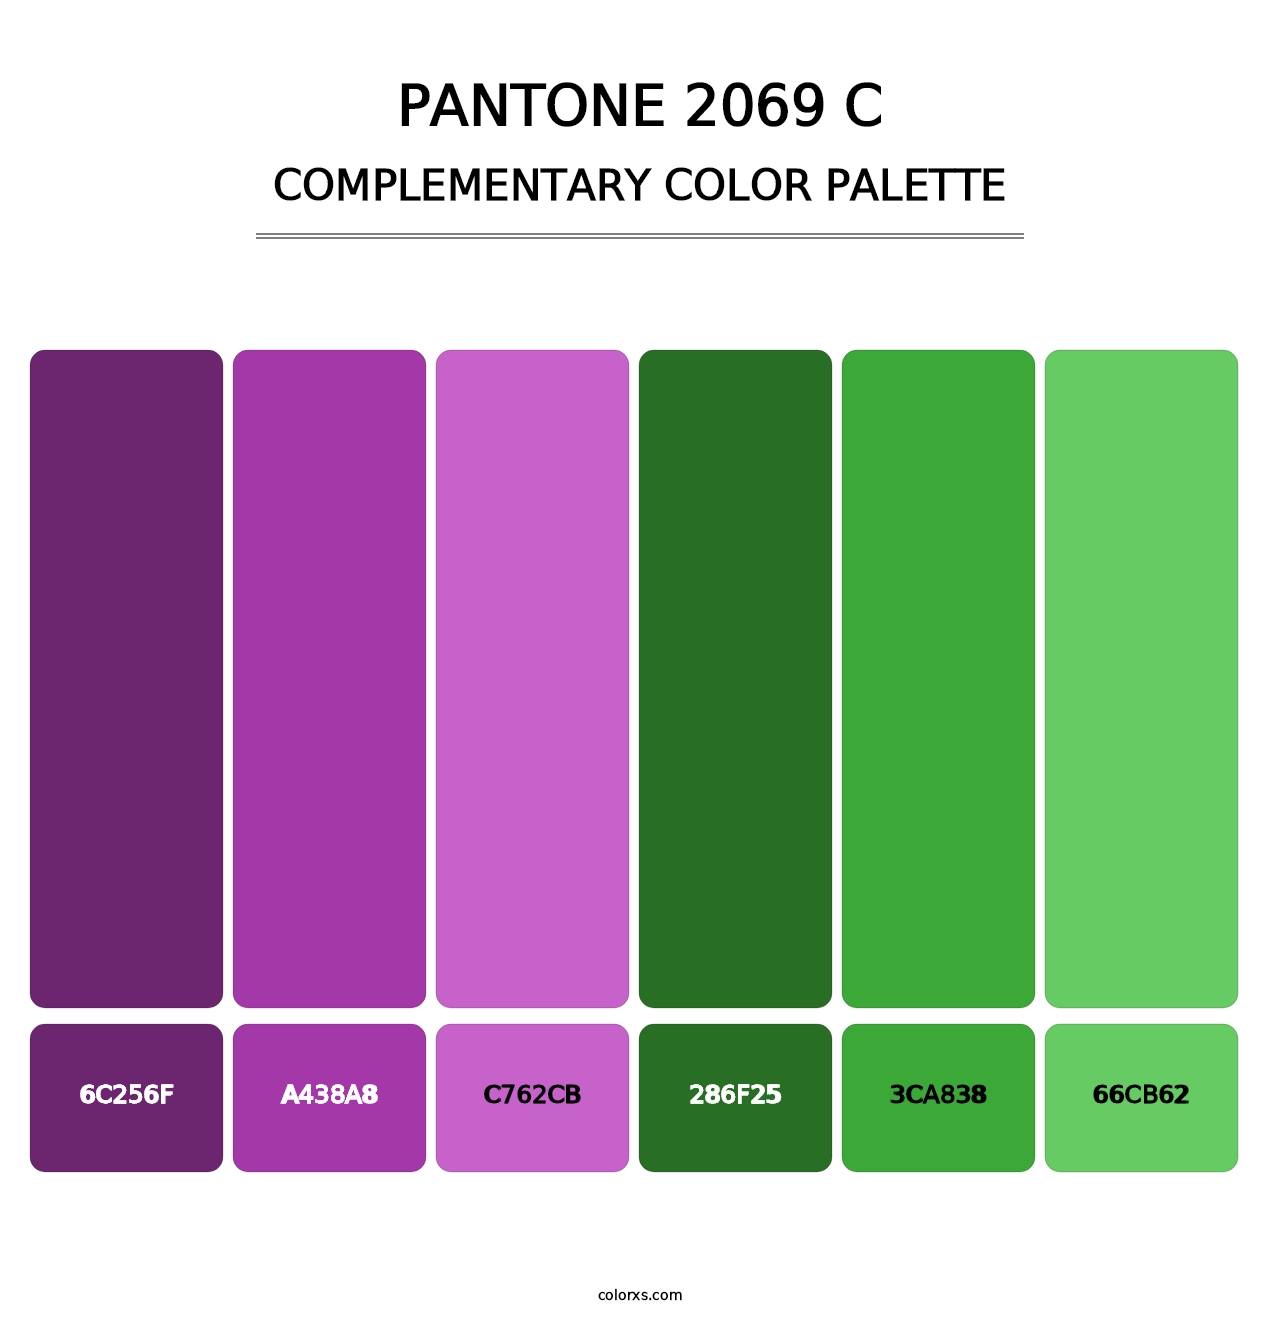 PANTONE 2069 C - Complementary Color Palette